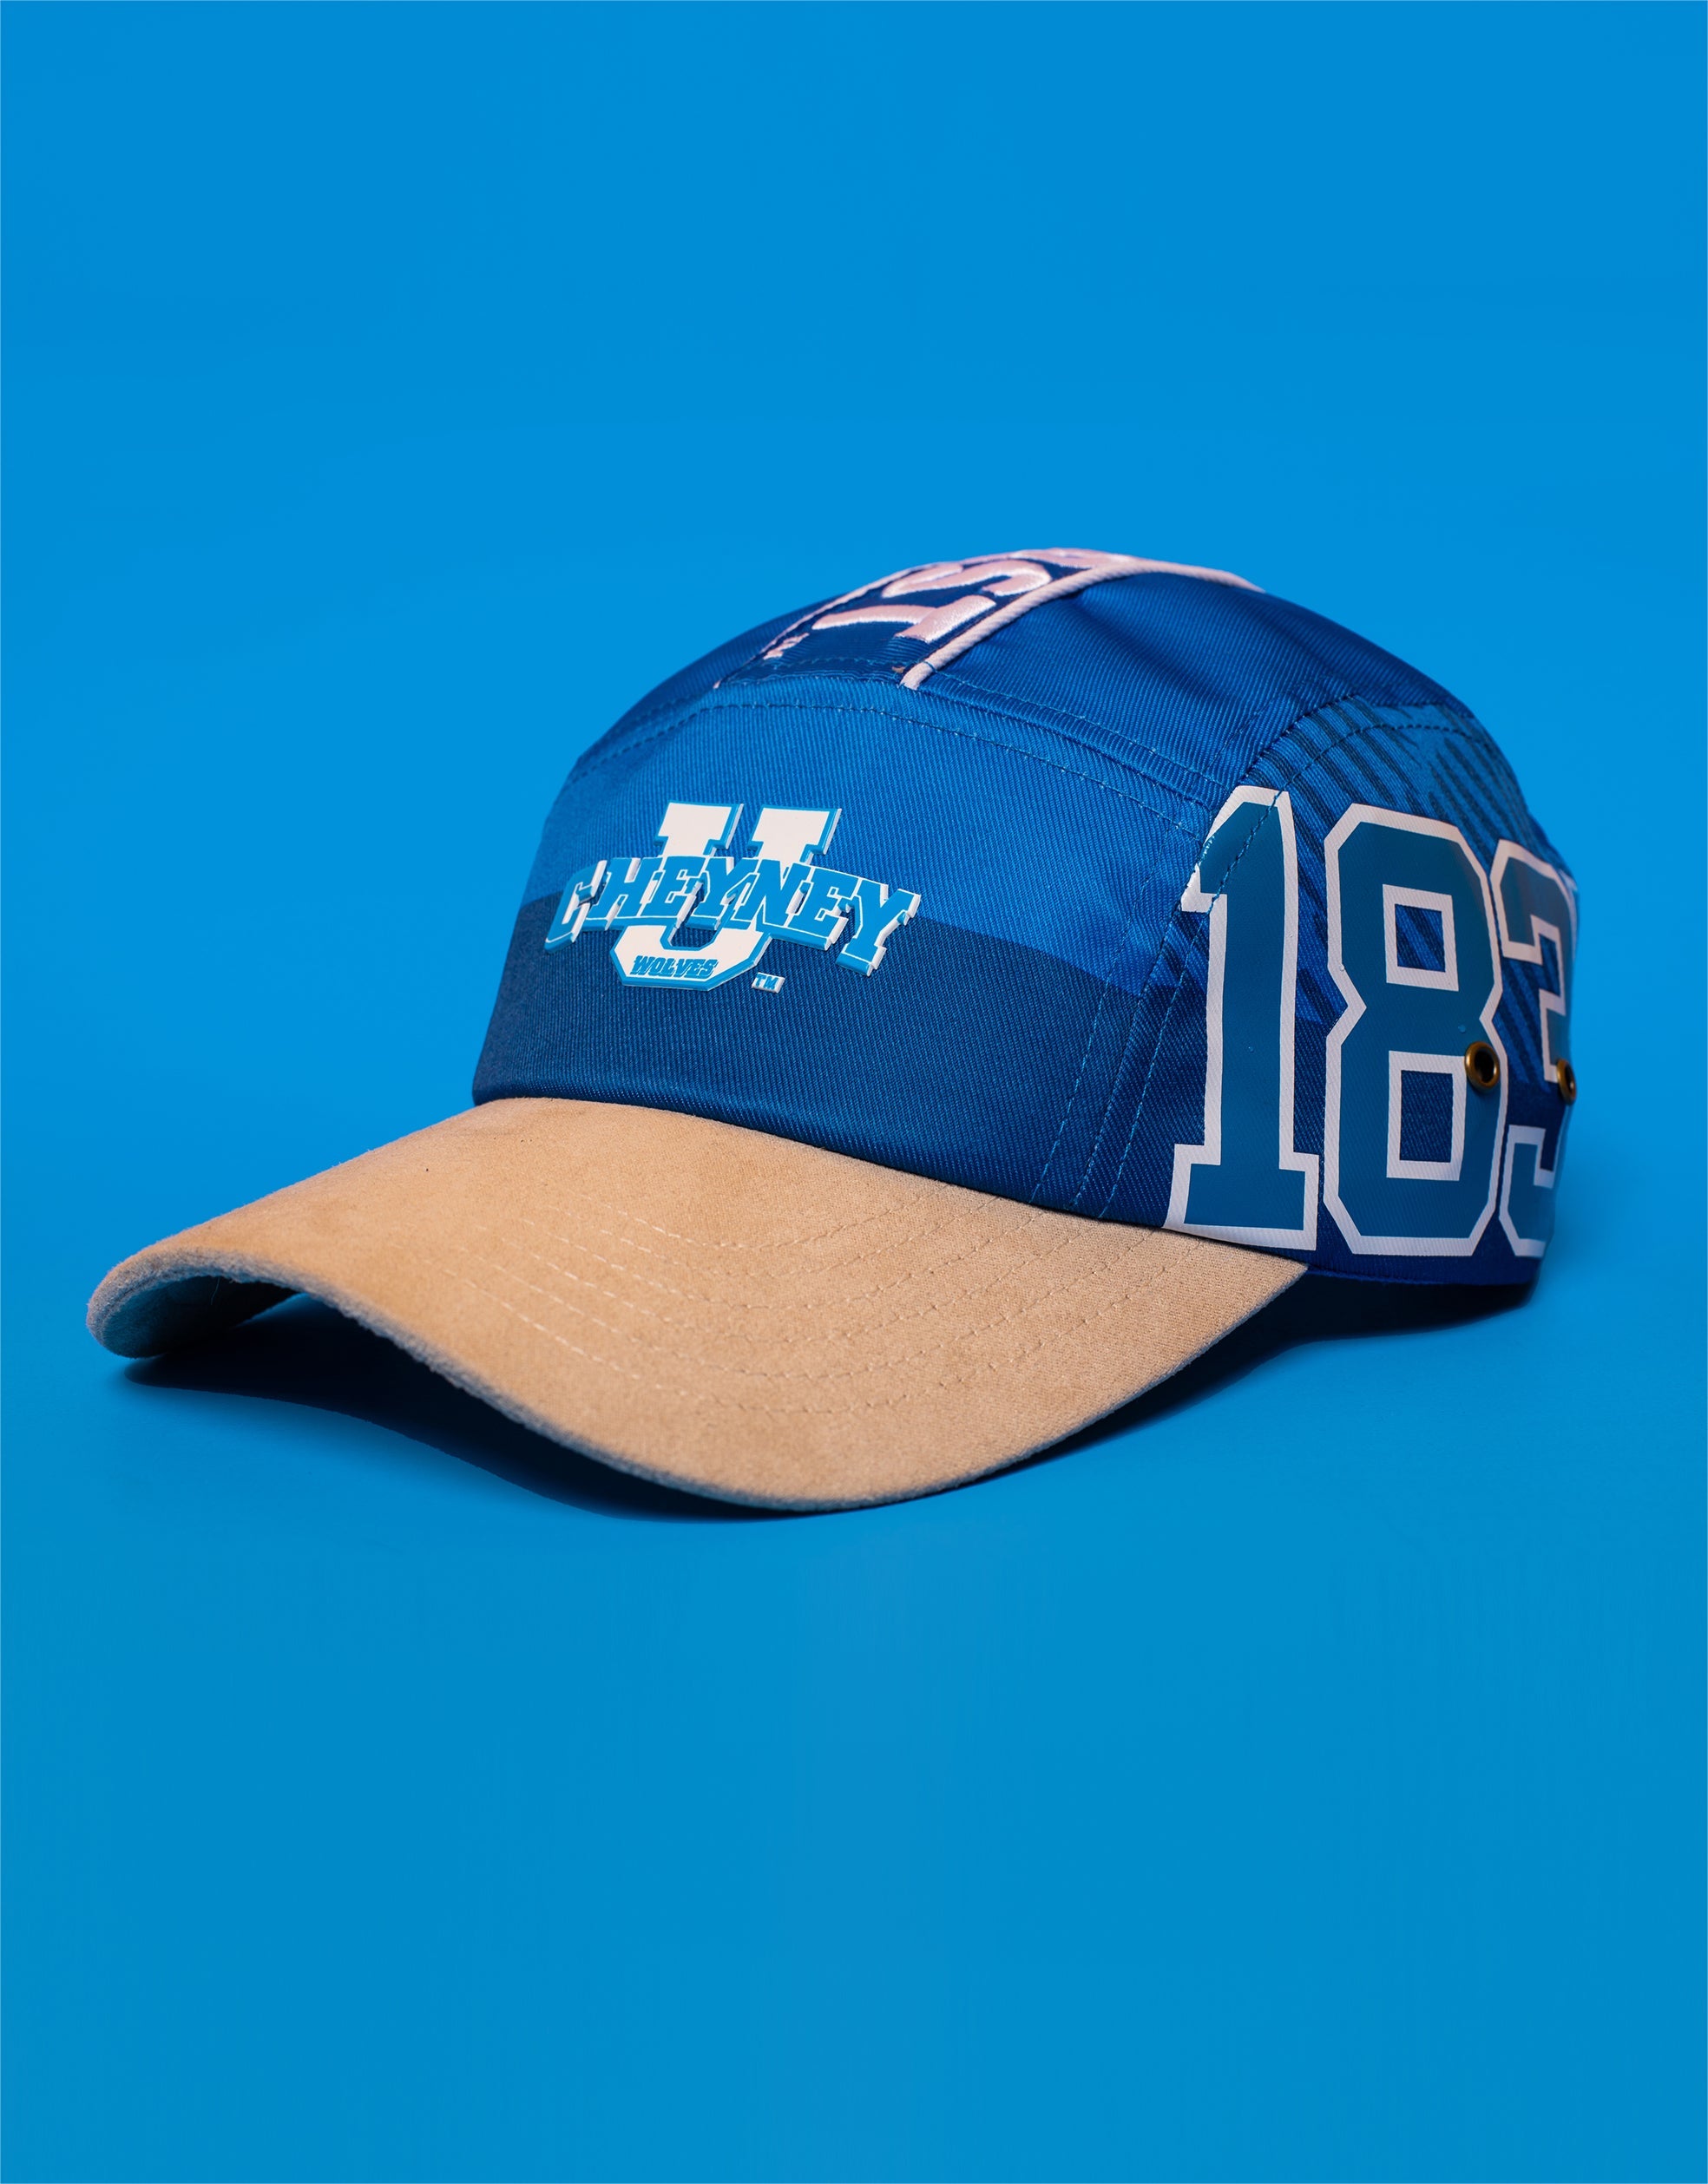 TheYard - Cheyney University - HBCU Hat